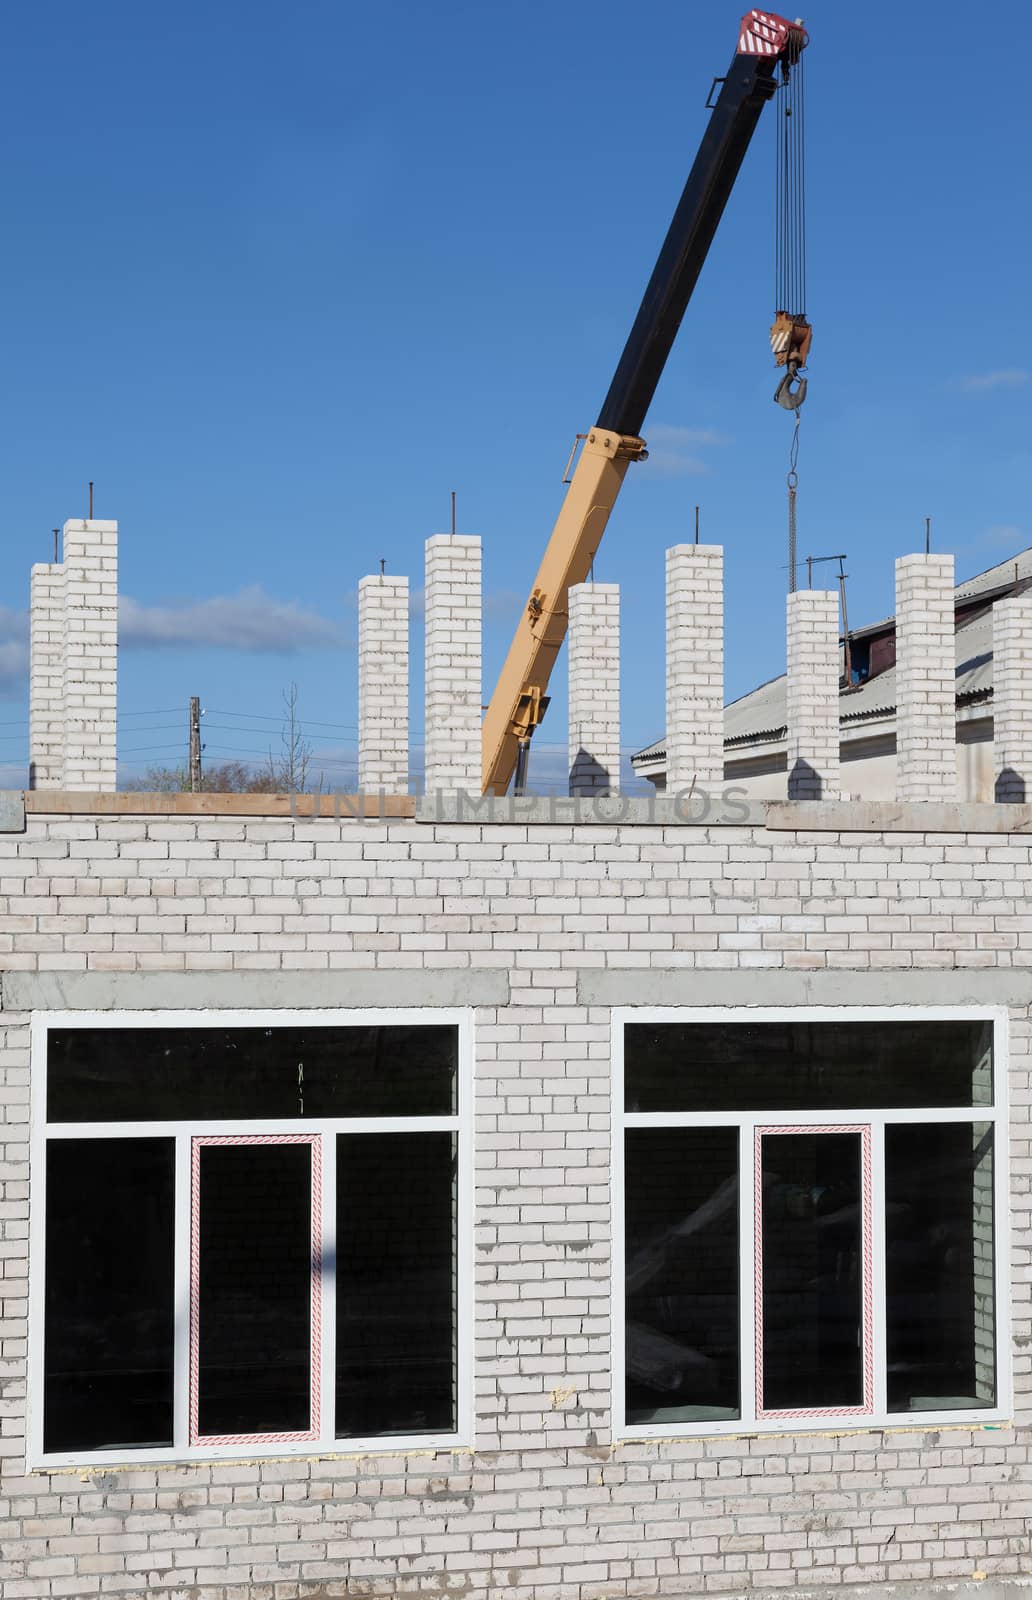 Building a house out of gray bricks using a crane